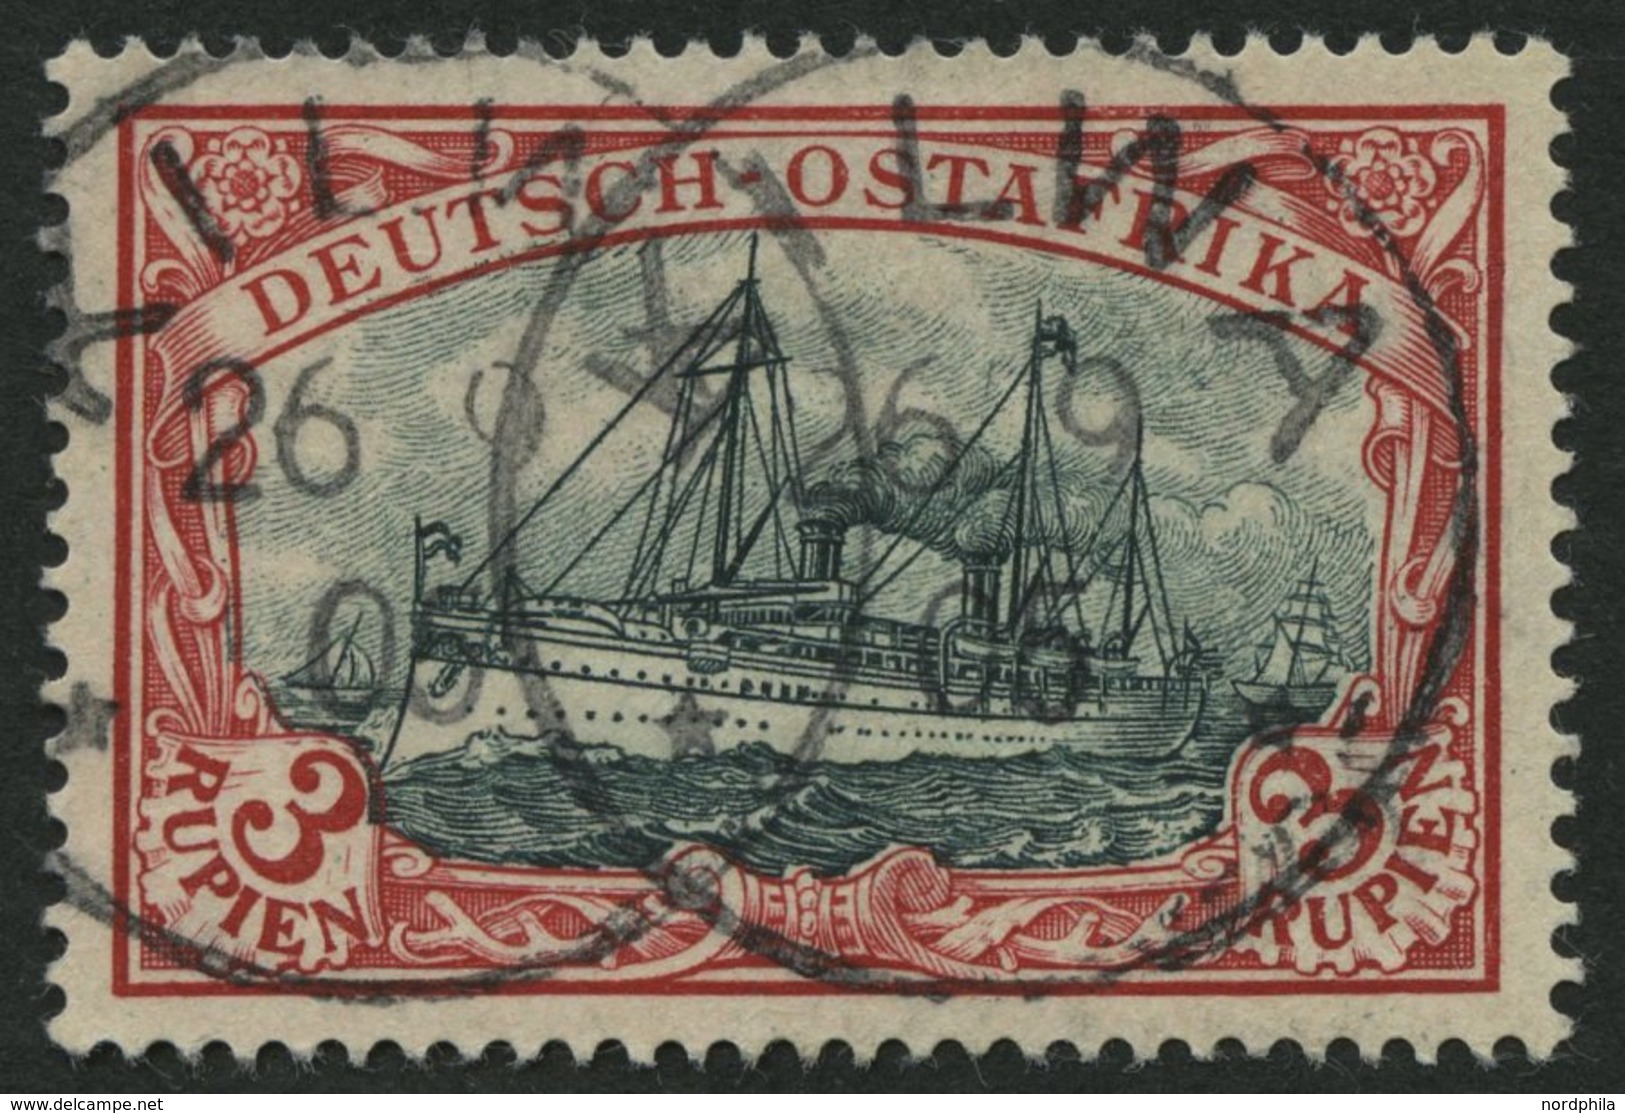 DEUTSCH-OSTAFRIKA 21b O, 1901, 3 R. Dunkelrot/grünschwarz, Ohne Wz., Stempel KILWA, Pracht, Mi. 230.- - German East Africa